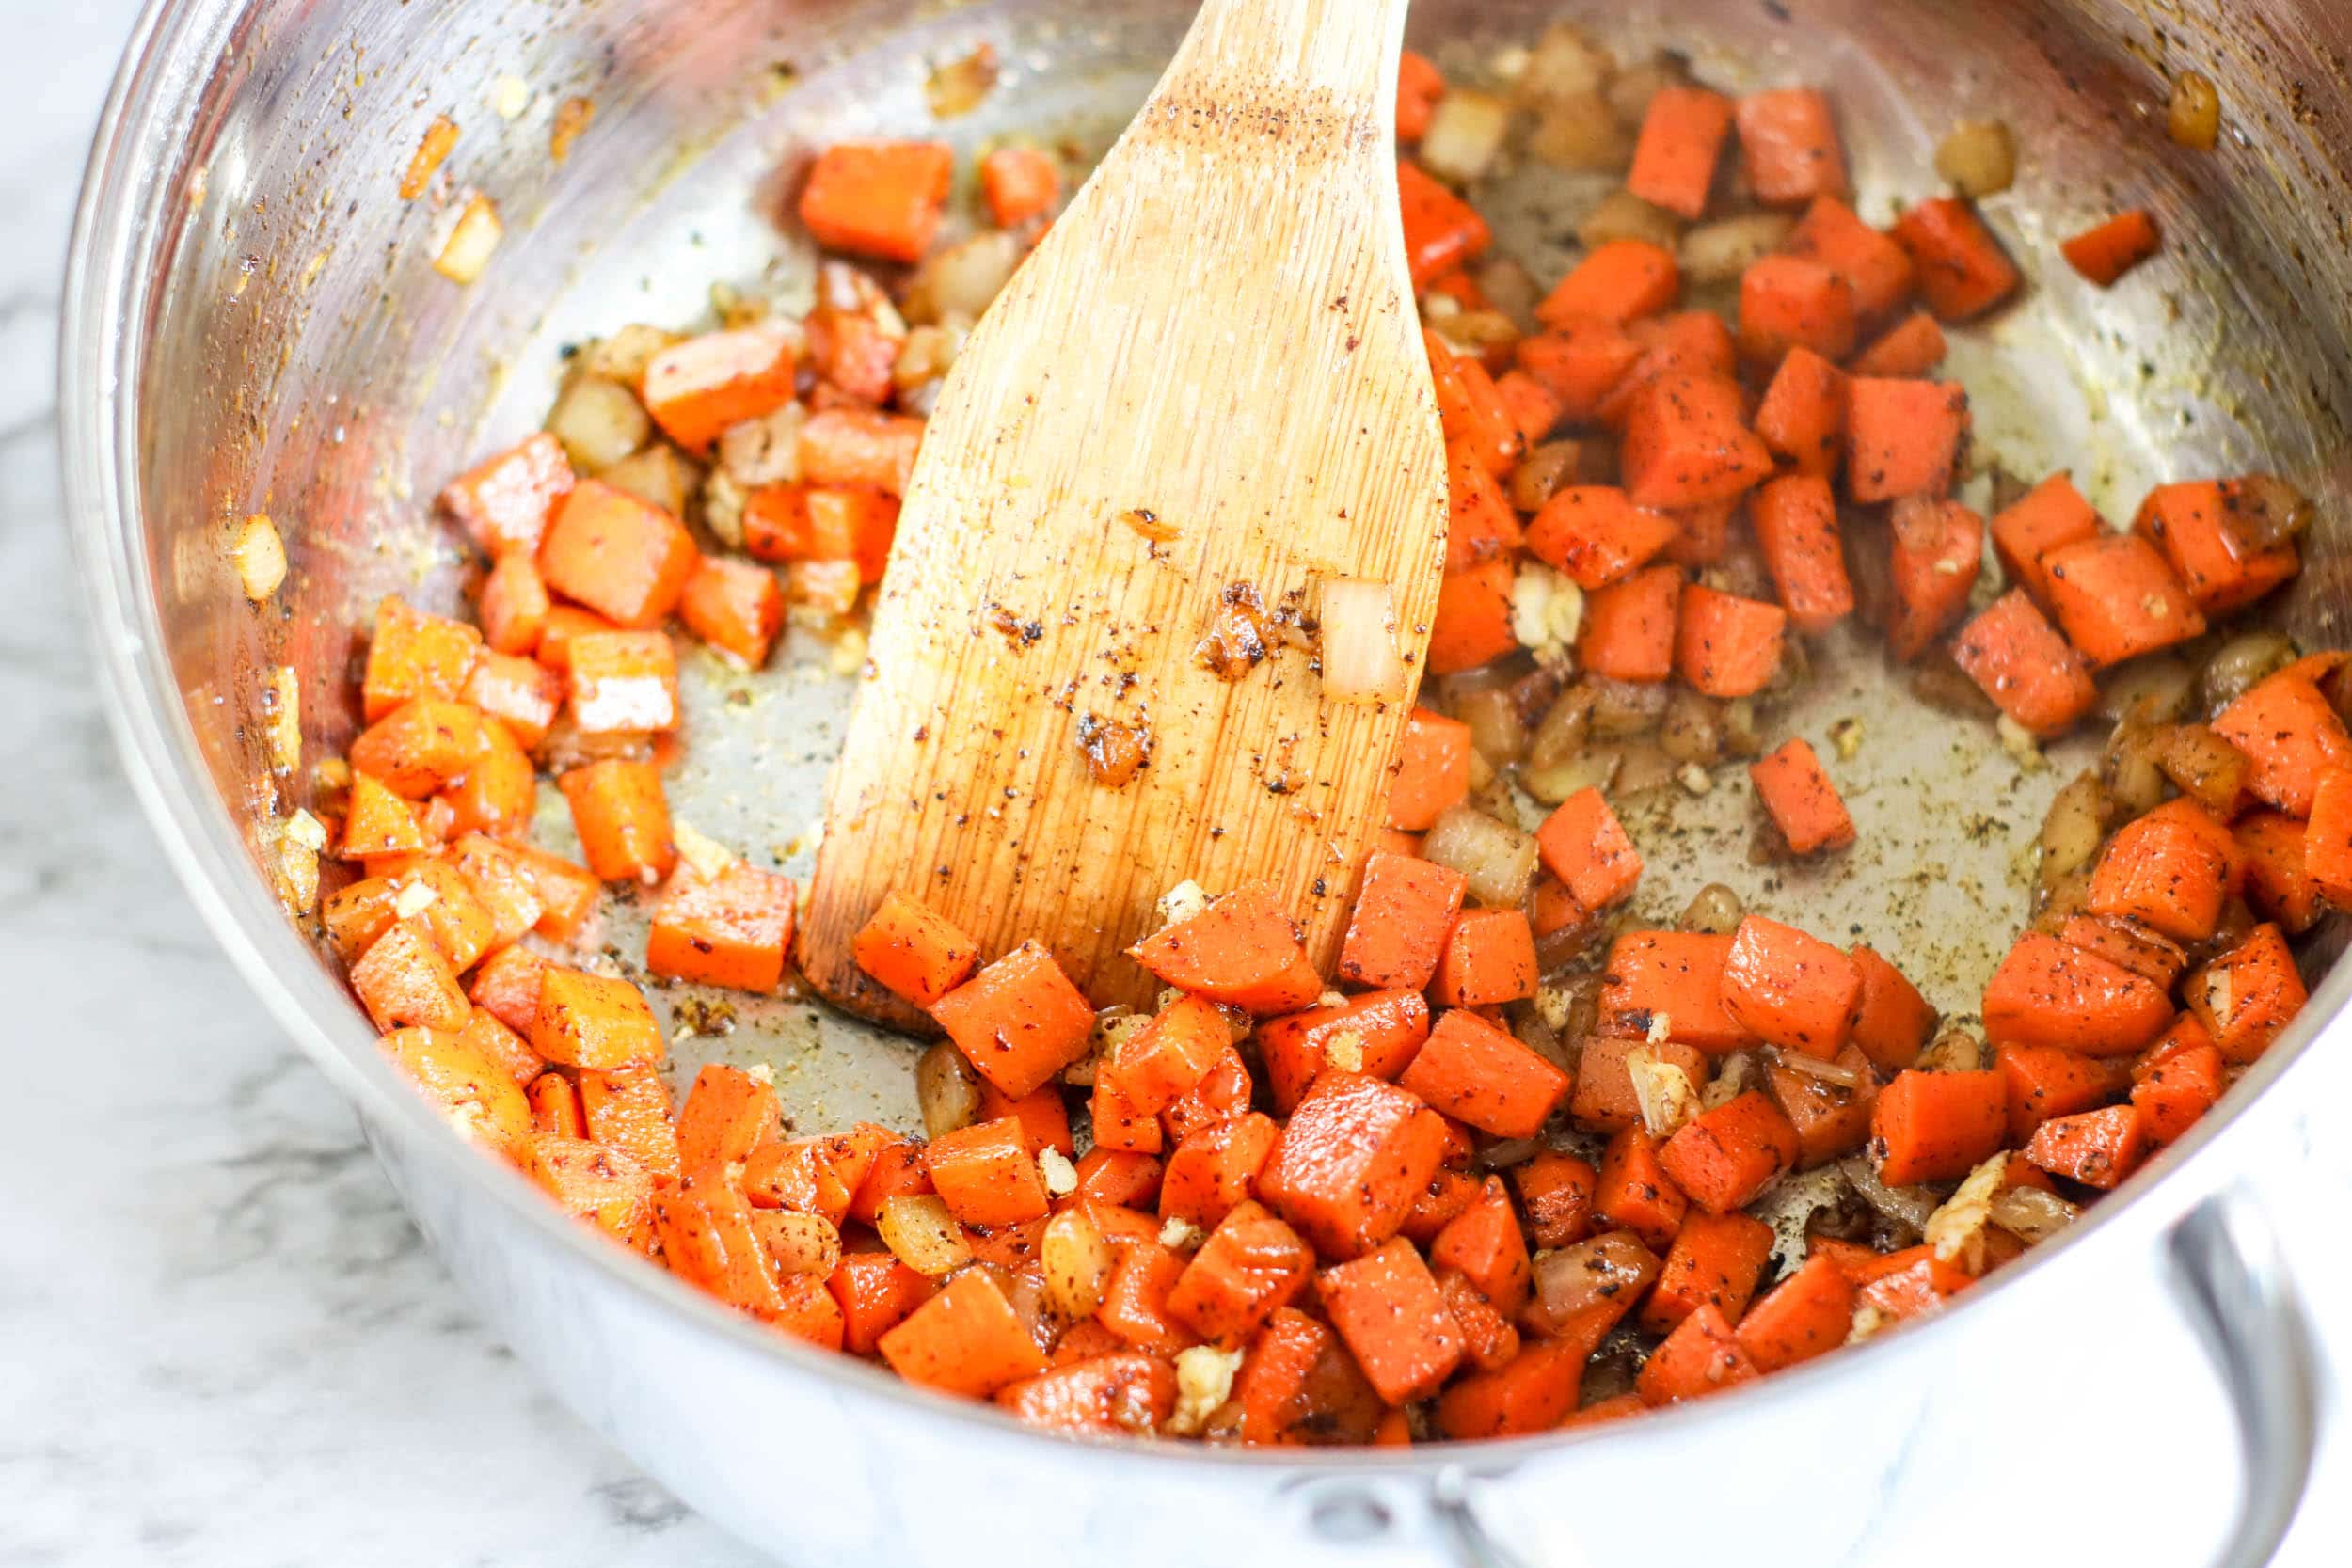 chicken kale quinoa soup adding carrots